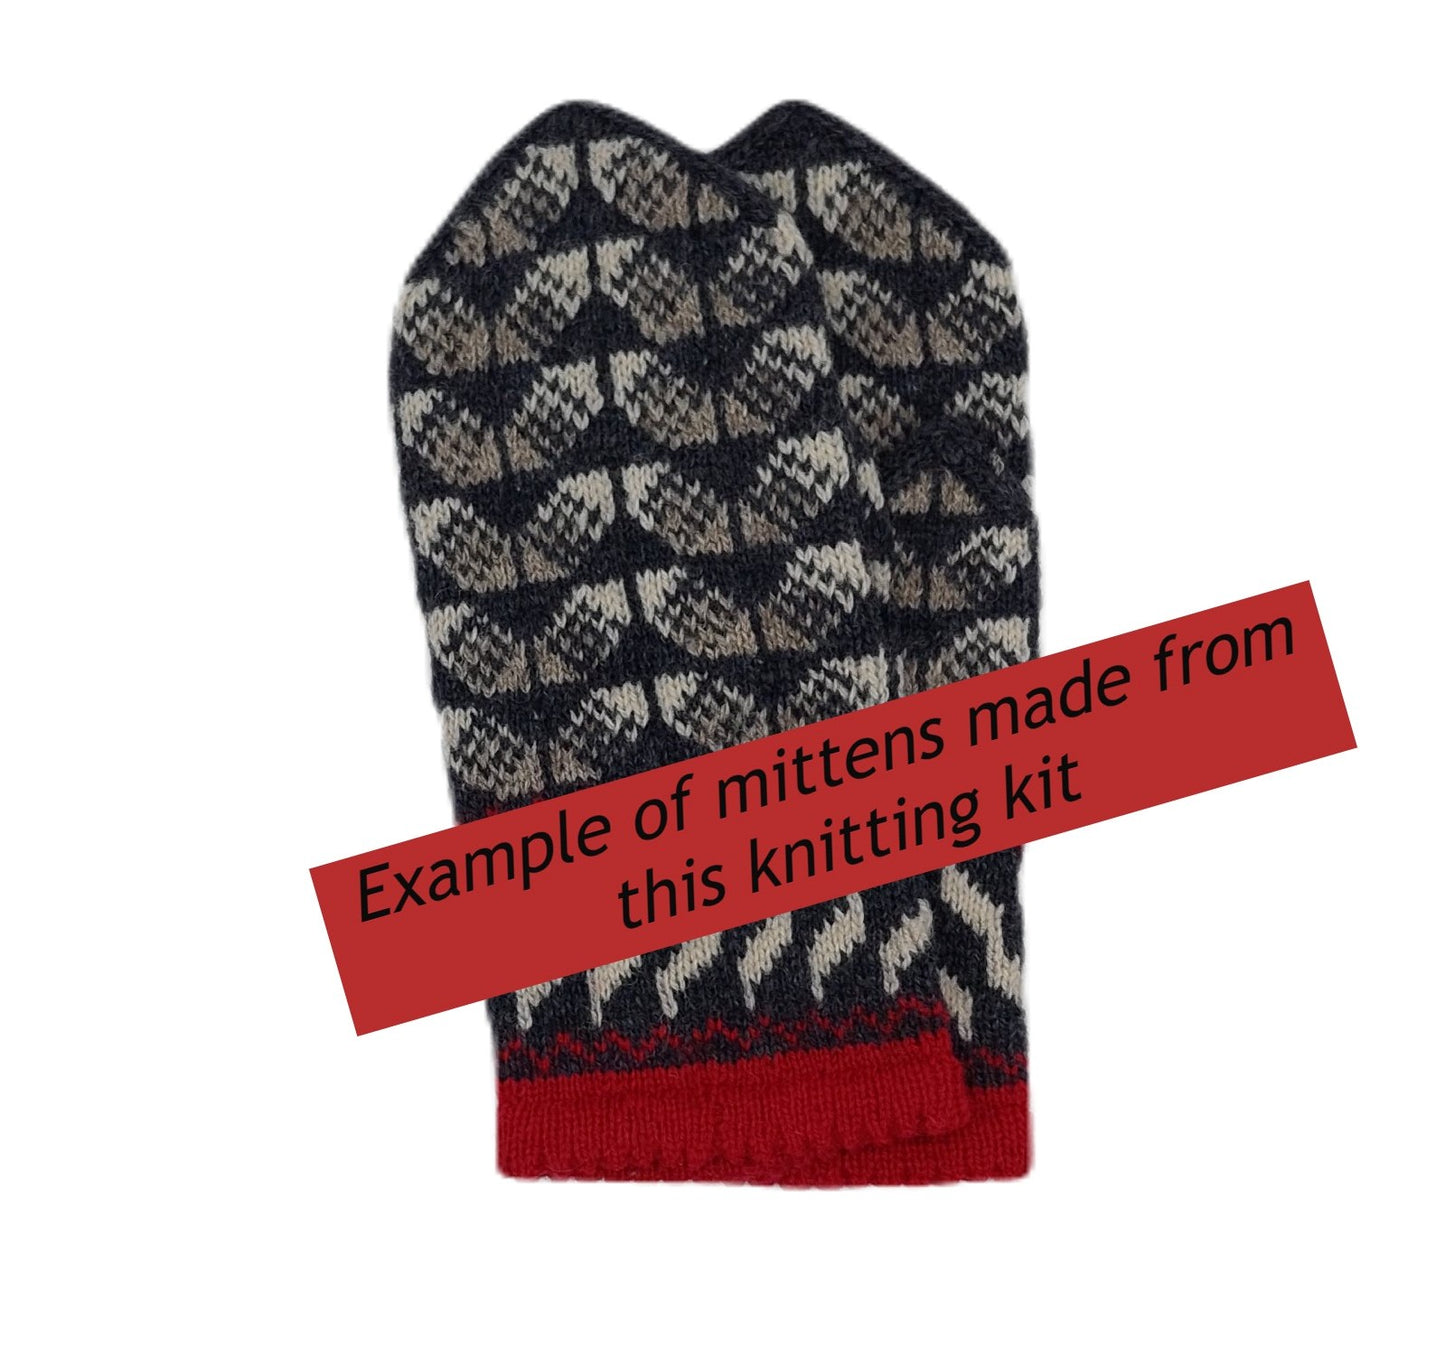 Knitting kit "Latvian Gray 9"